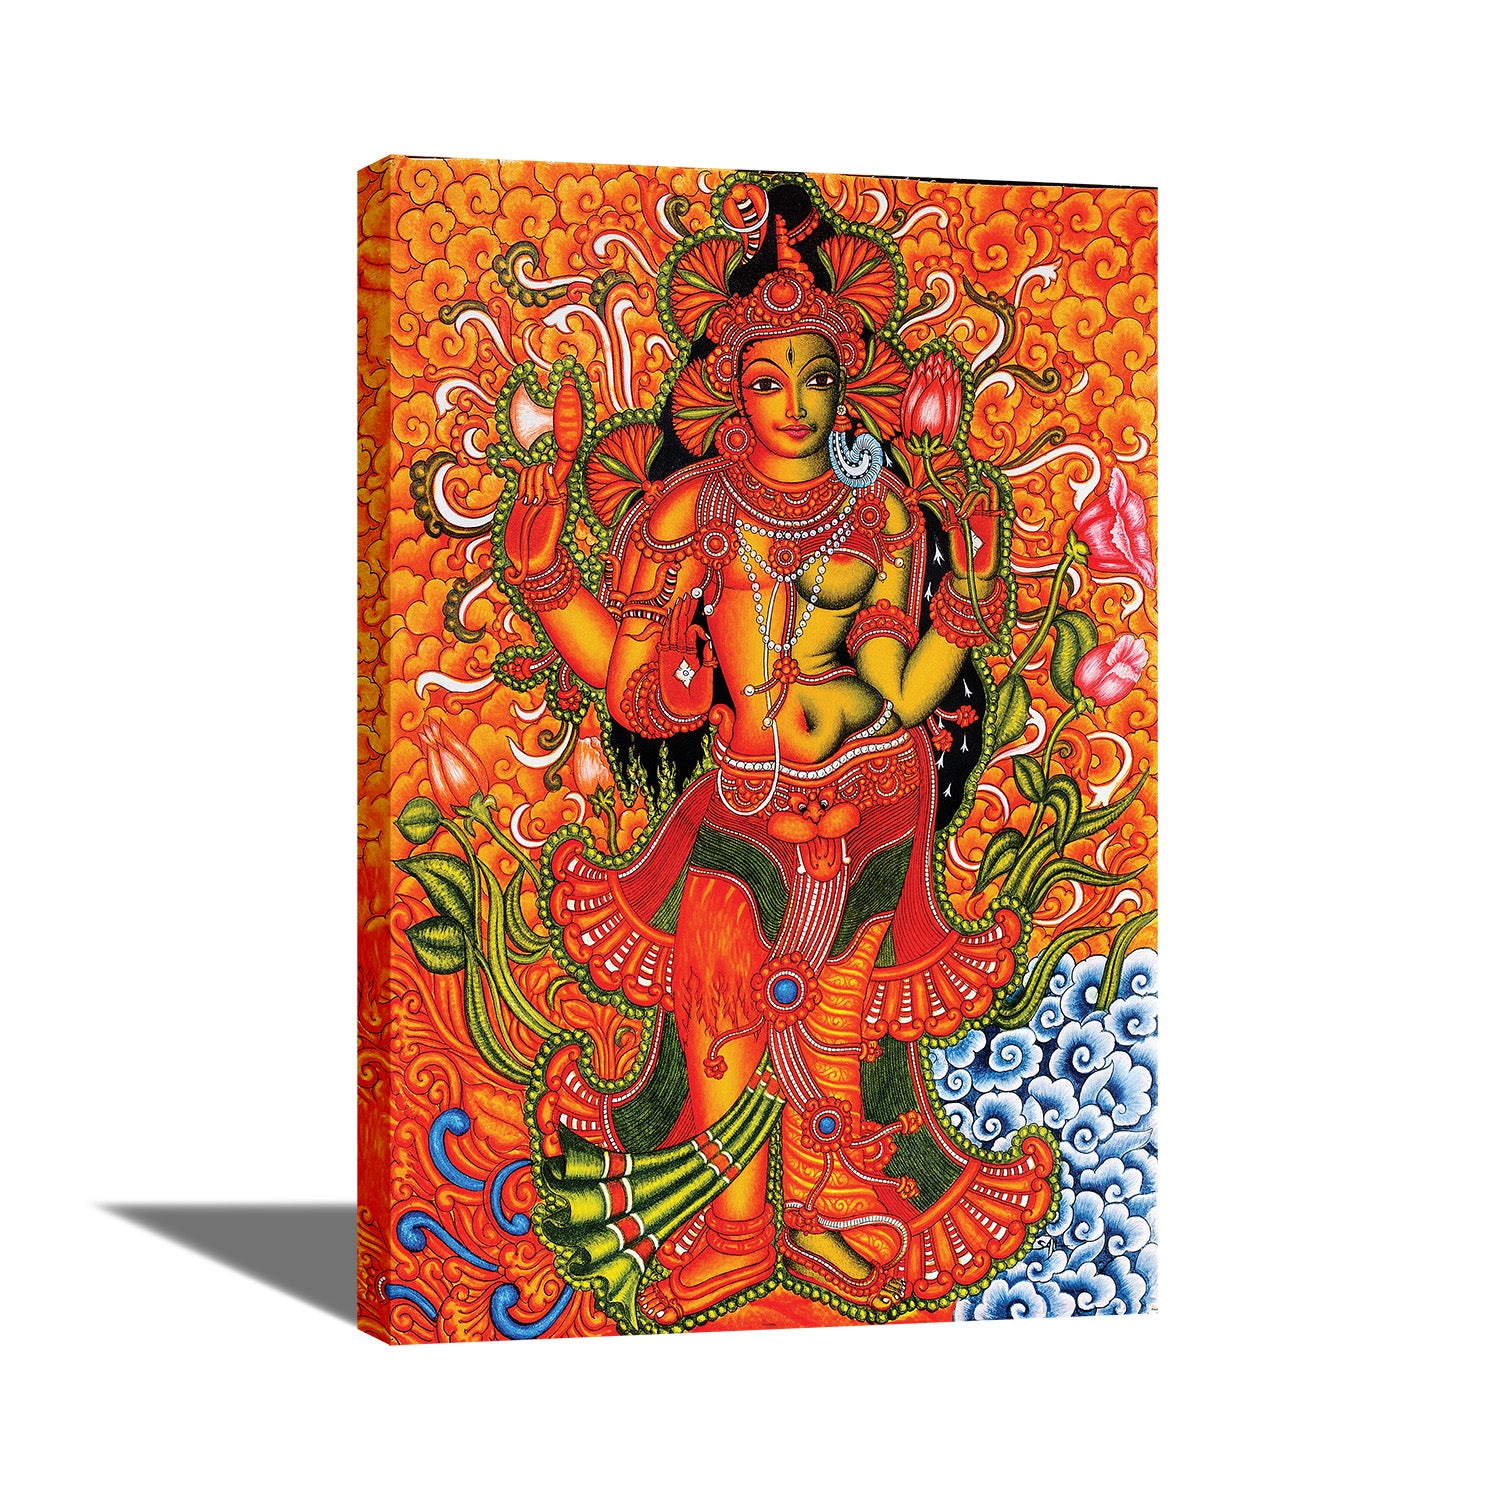 ArdhNarishvara Shiva - Canvas Painting - Framed